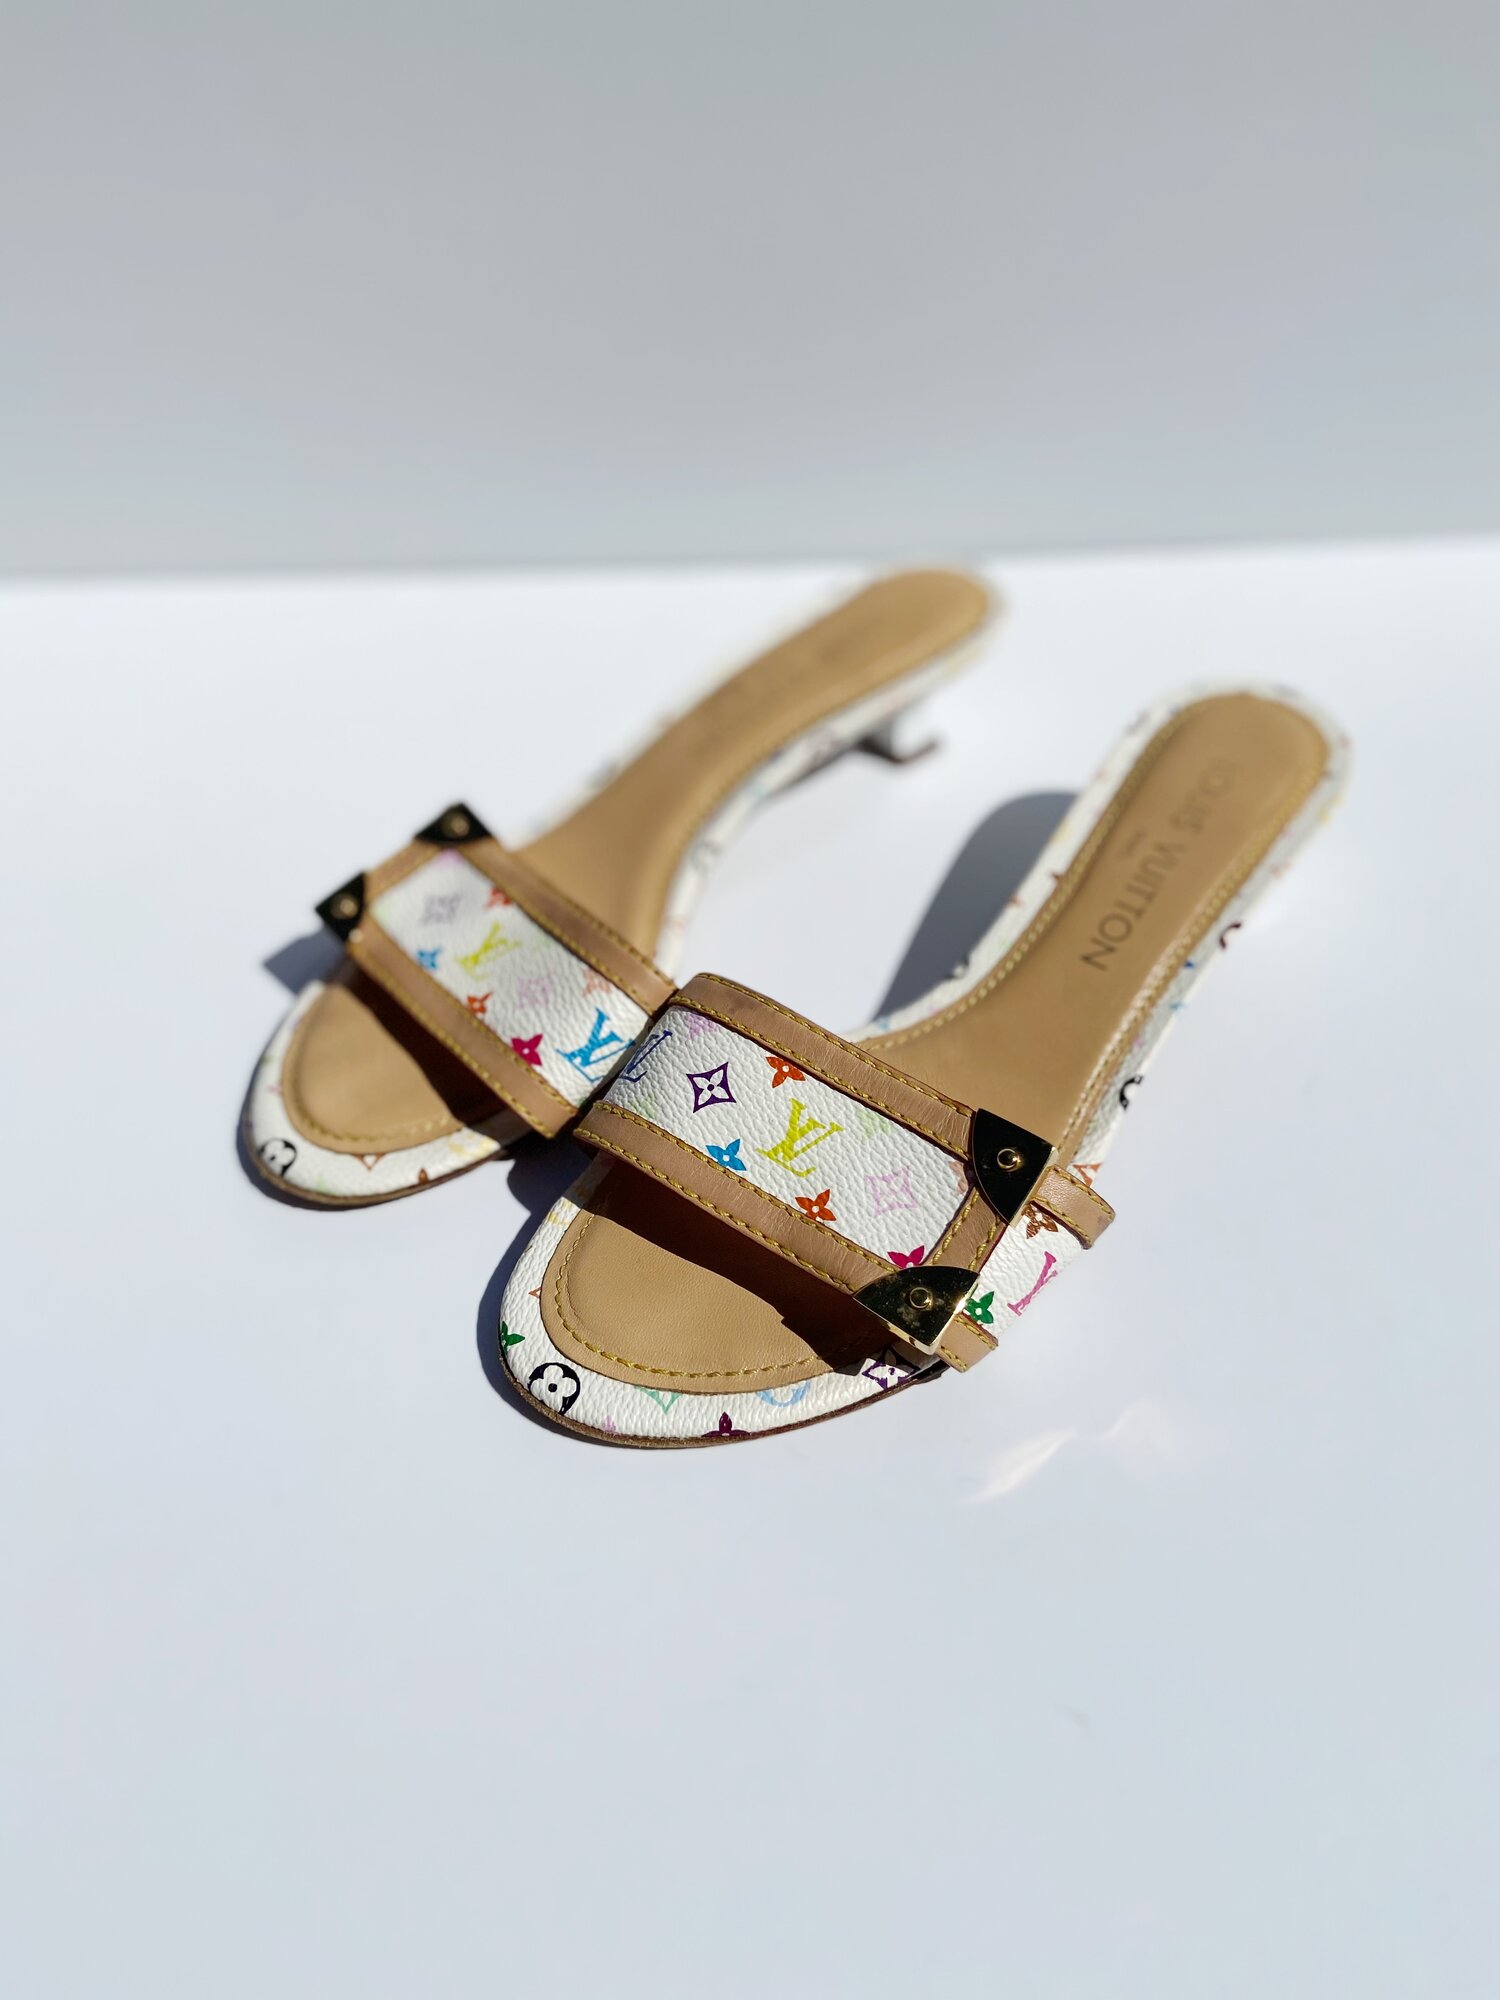 Louis Vuitton White Monogram Multicolore Kitten Heel Sandals Size